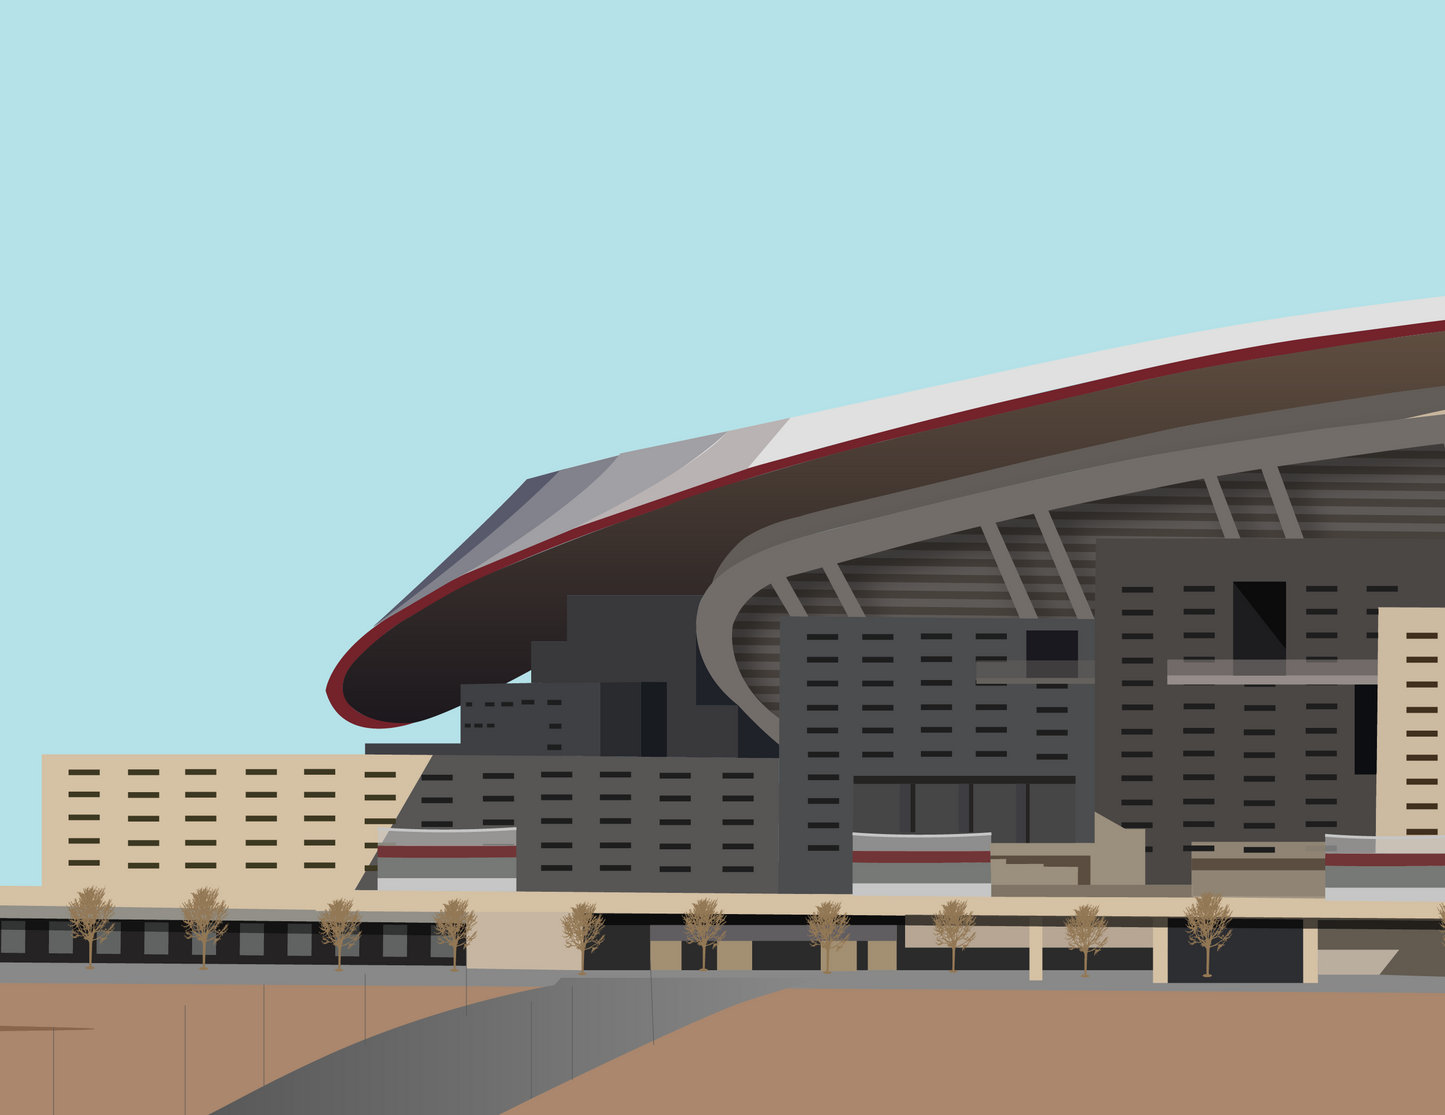 Wanda Metropolitano - Atletico Madrid